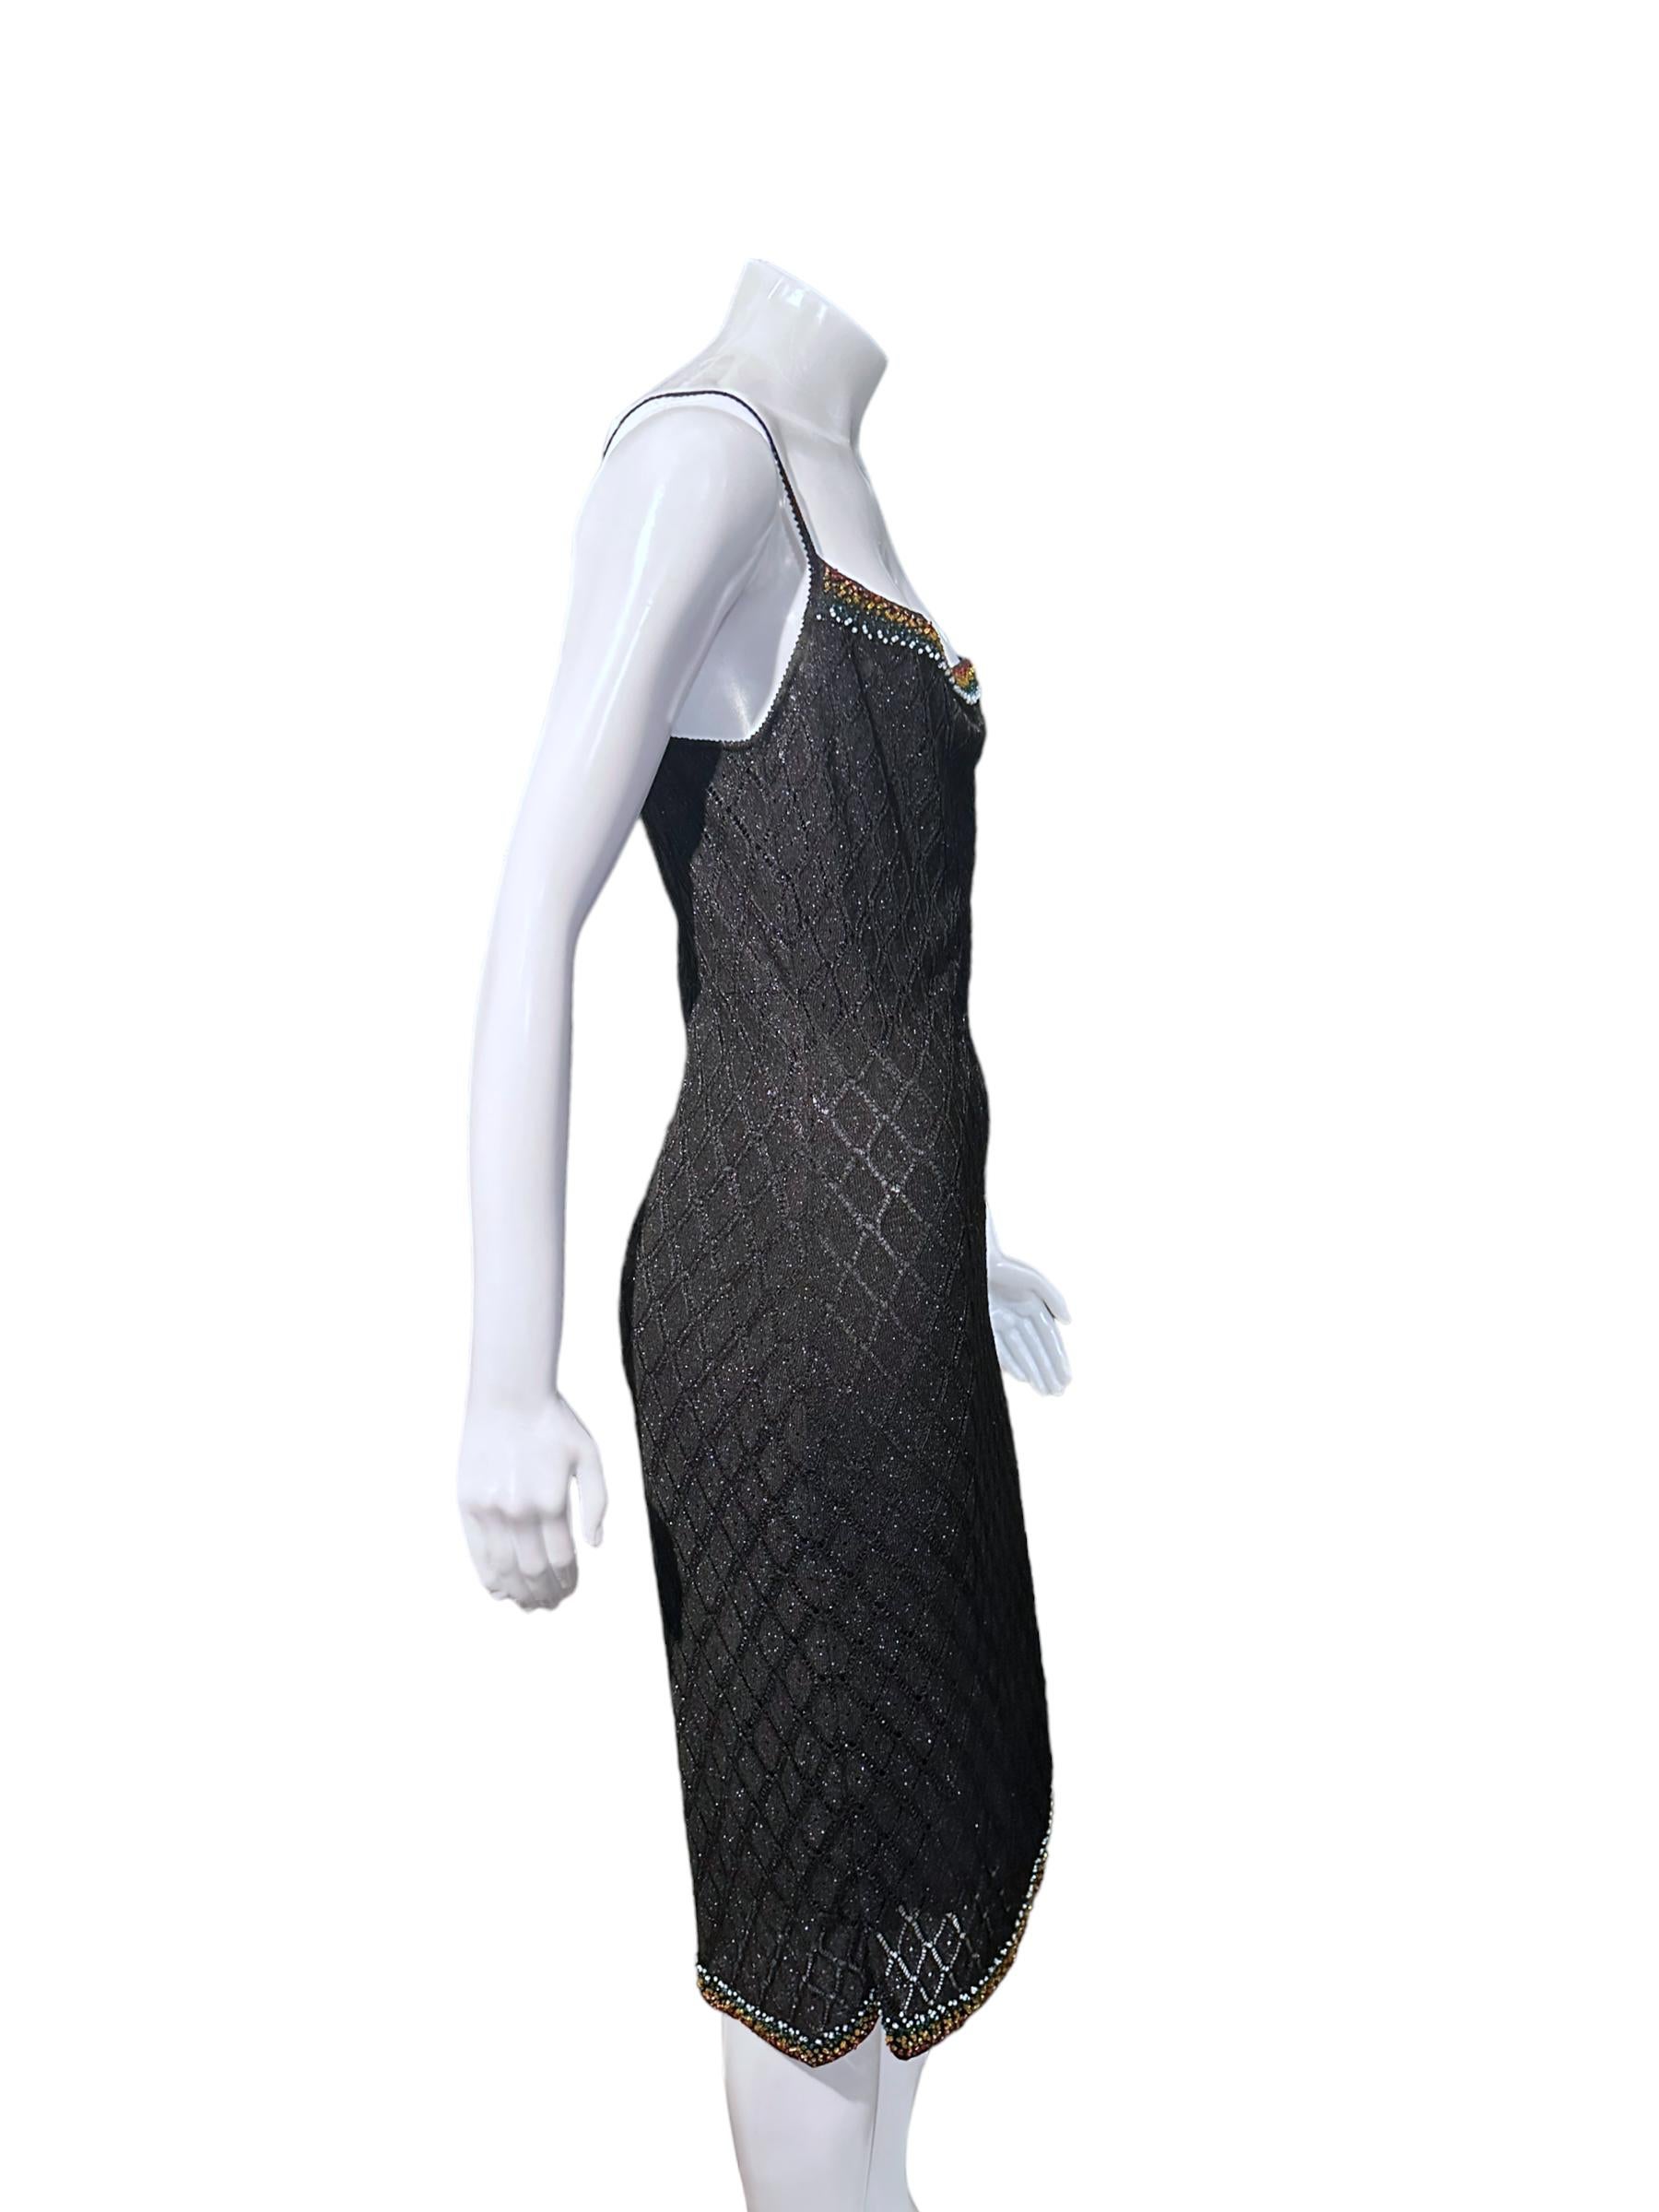 Christian Dior By John Galliano Fw 2001 Beaded Neckline Knitted Short Slip Dress For Sale 1